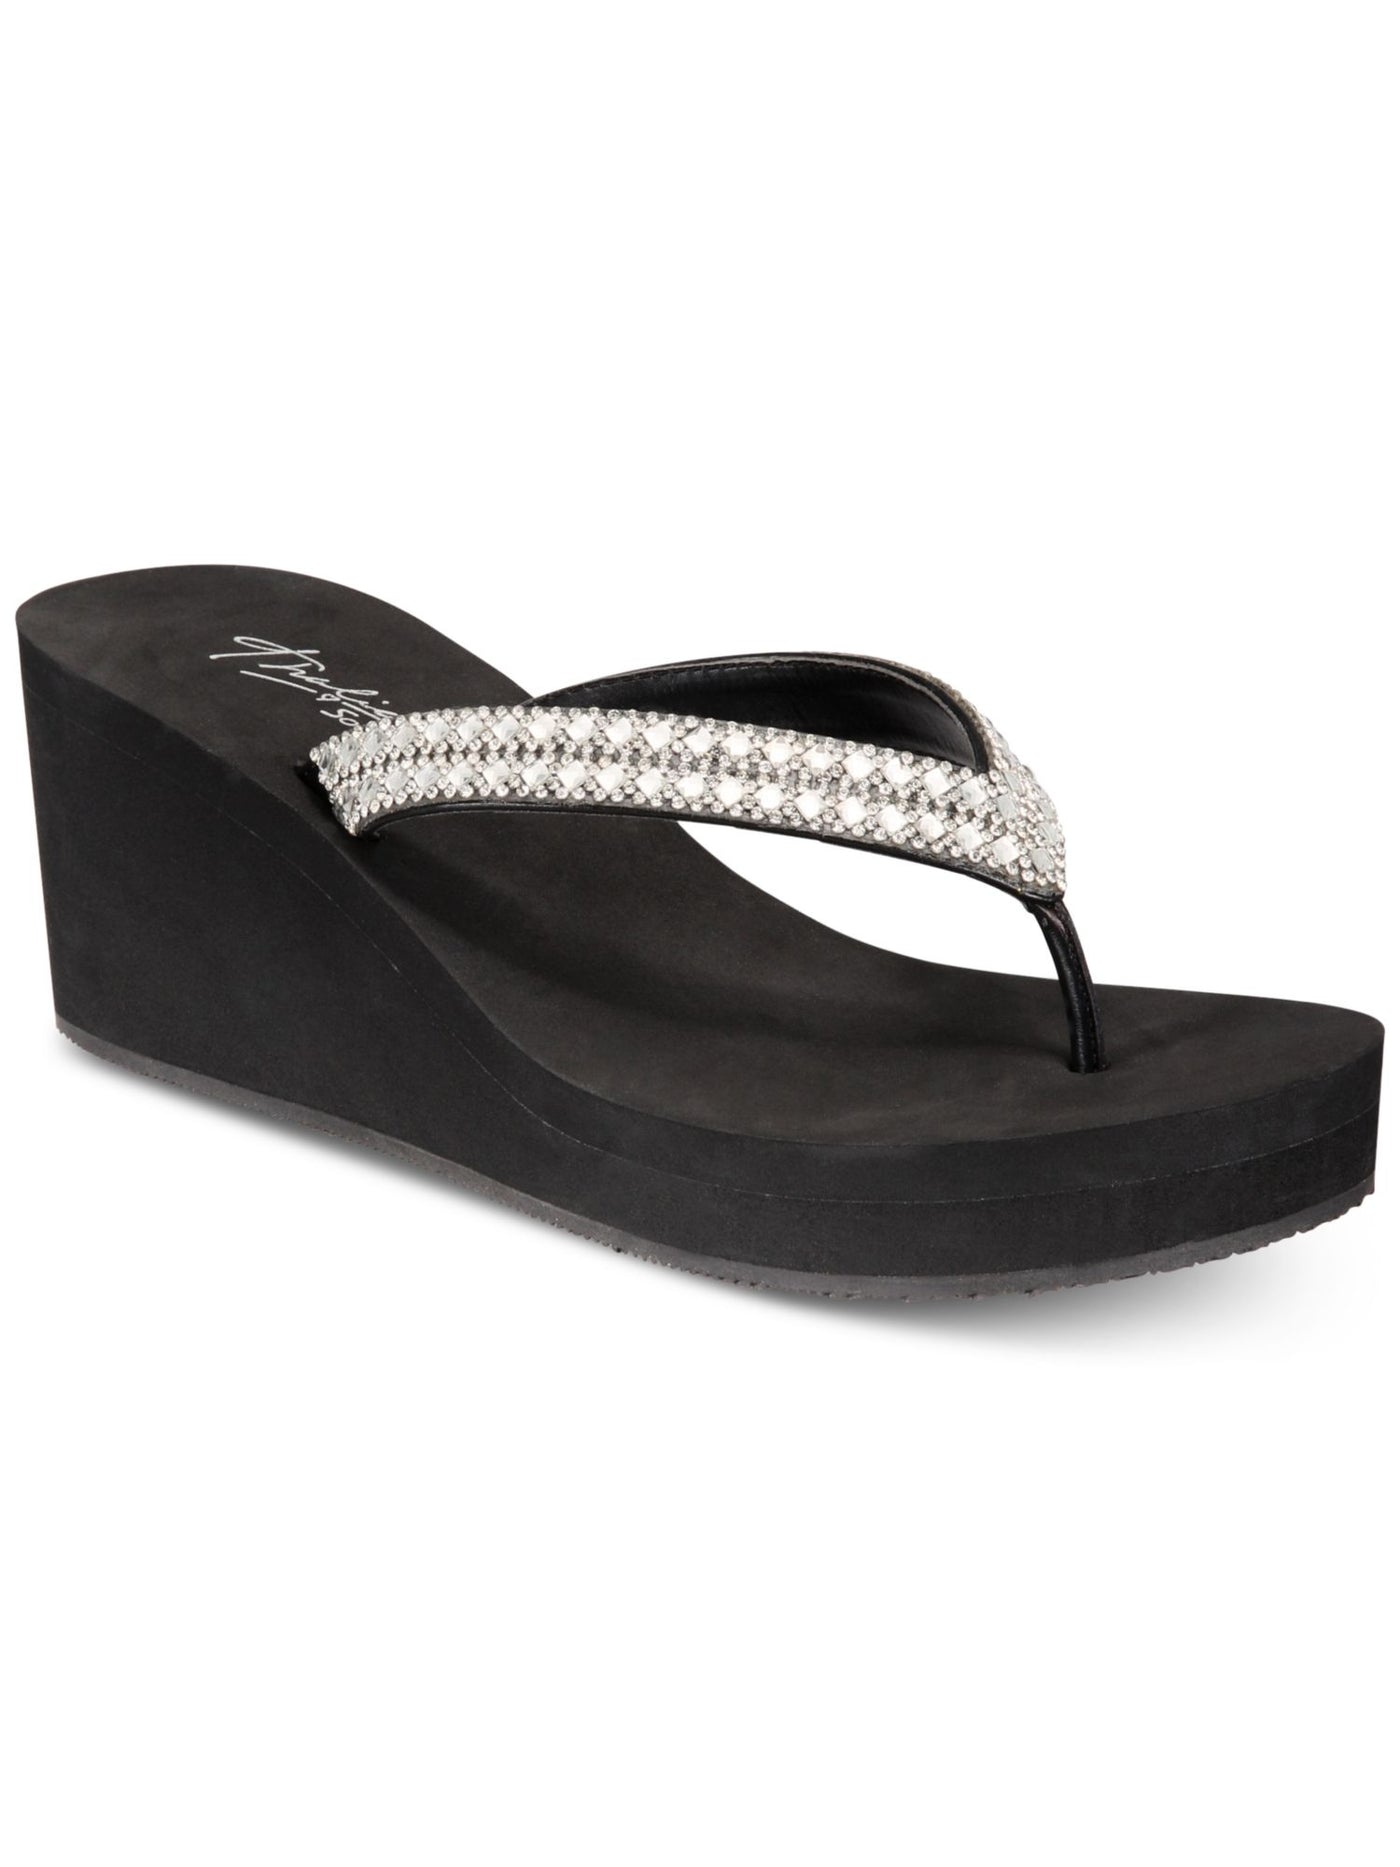 THALIA SODI Womens Black Rhinestone Embellishment Comfort Emira Round Toe Wedge Slip On Flip Flop Sandal 11 M